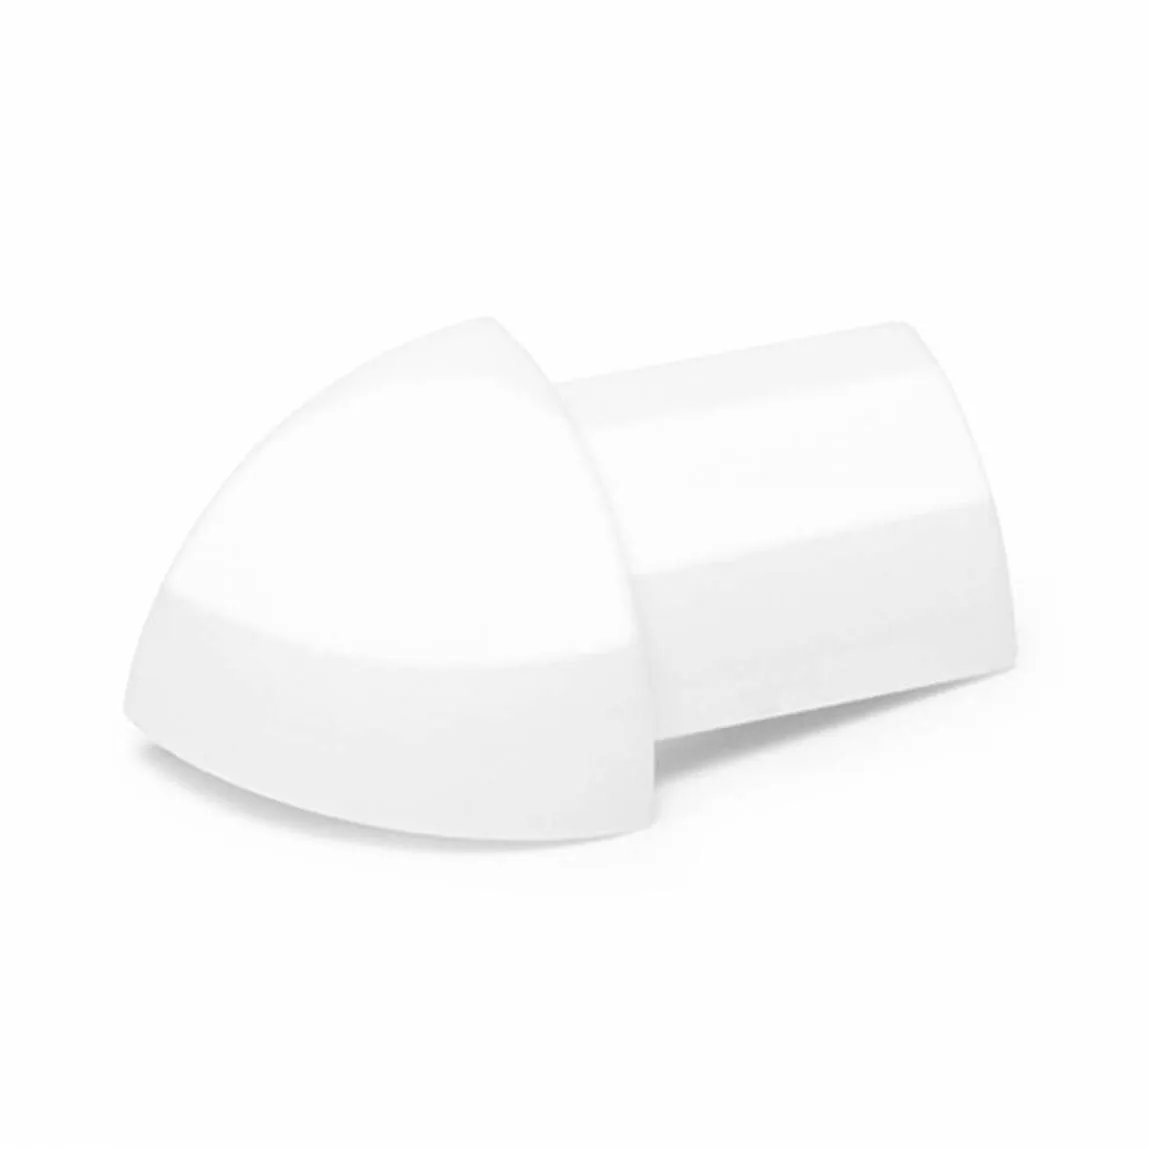 Homelux PVC super gloss white tile trim corners pack of 2